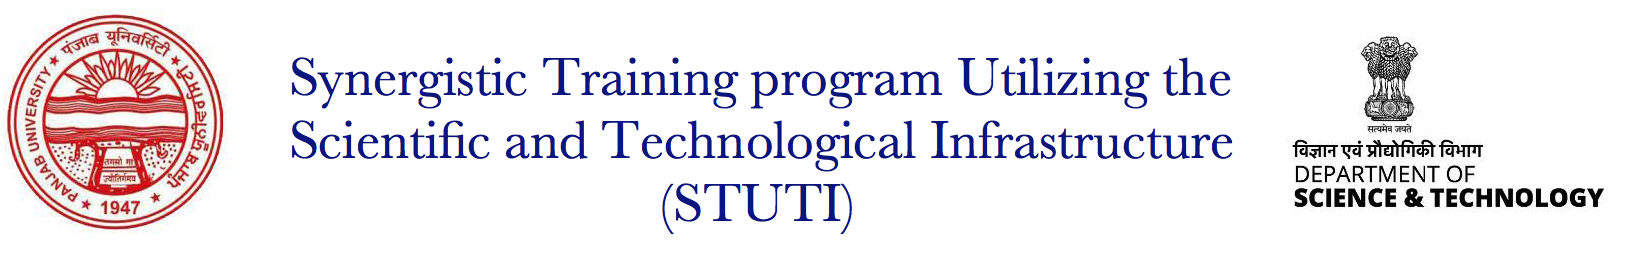 Synergistic Training program Utilizing the Scientific Technological Infrastructure (STUTI)